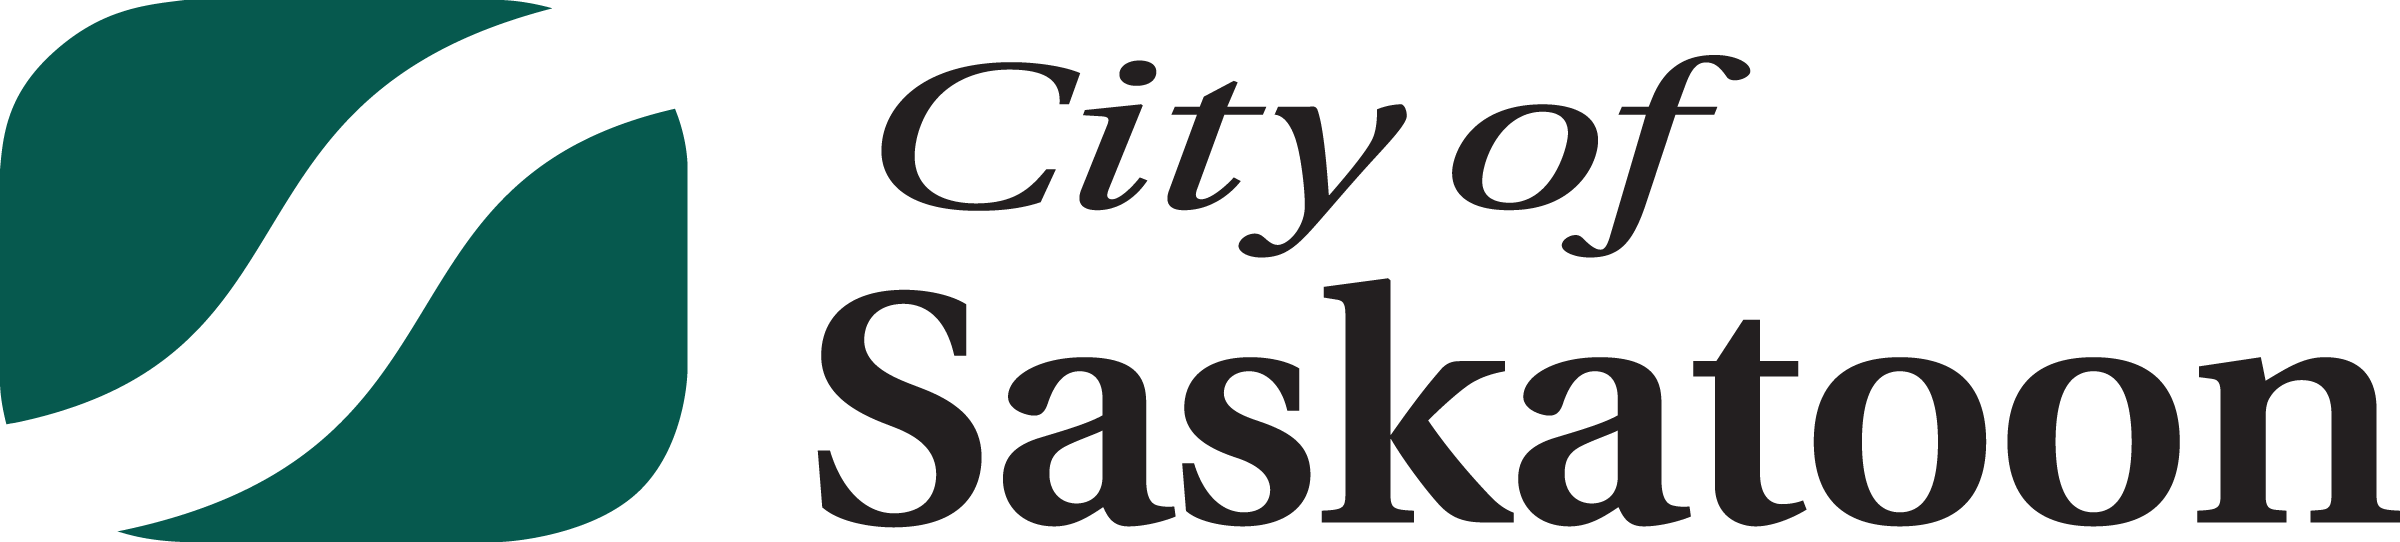 City of Saskatoon Grants logo